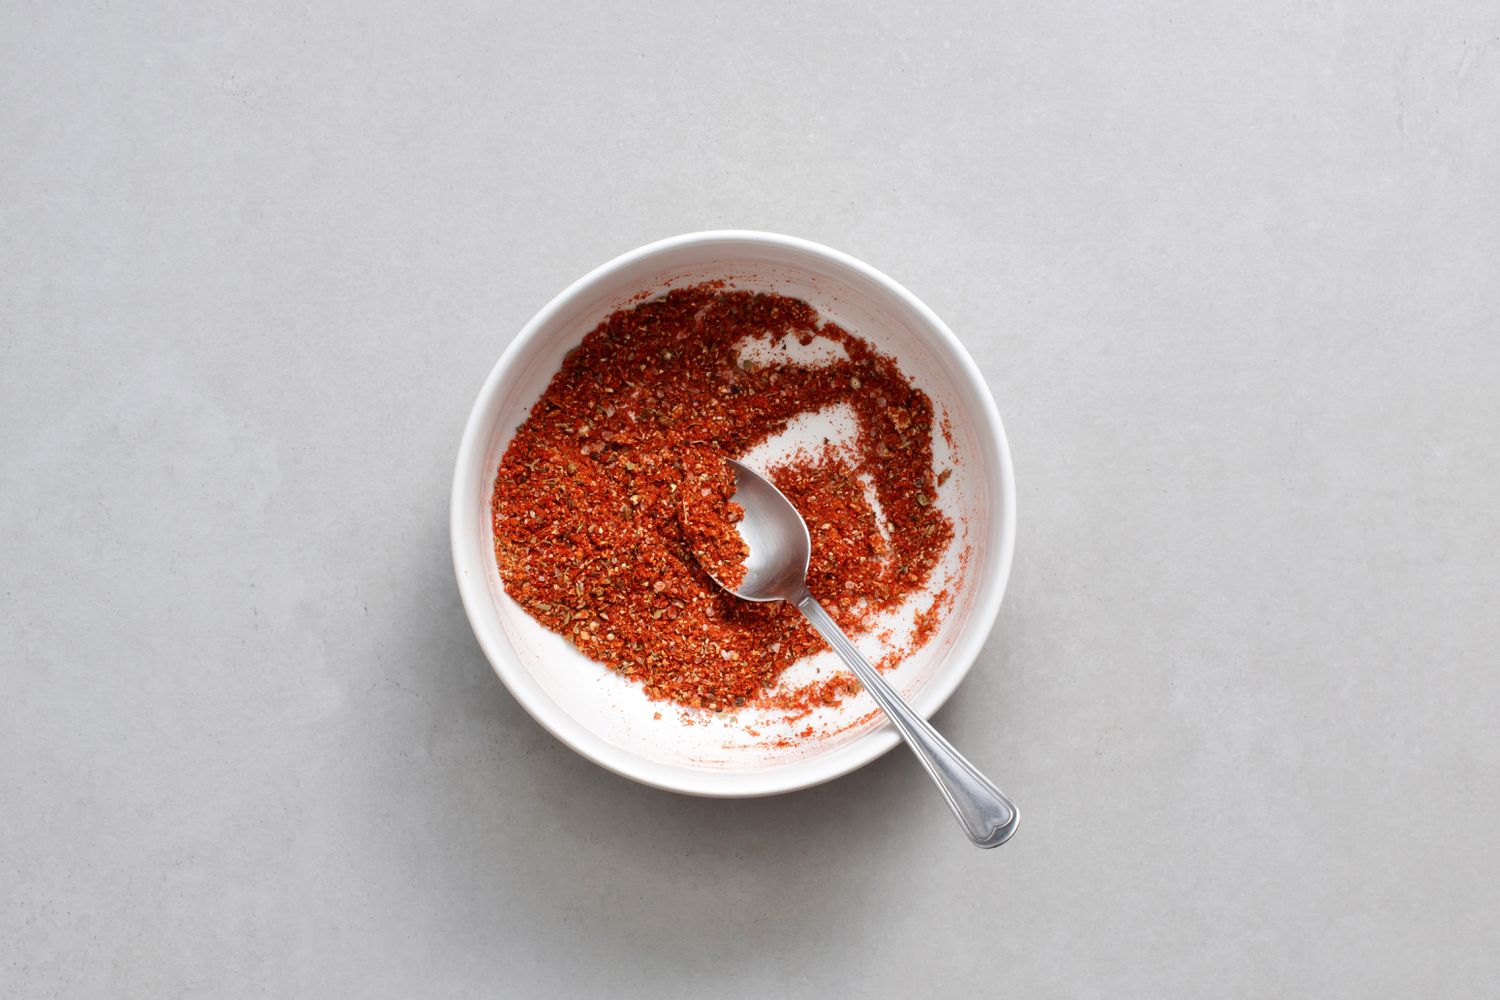 combine the chili powder, cumin, paprika, garlic powder, onion powder, oregano, salt, and pepper in a bowl